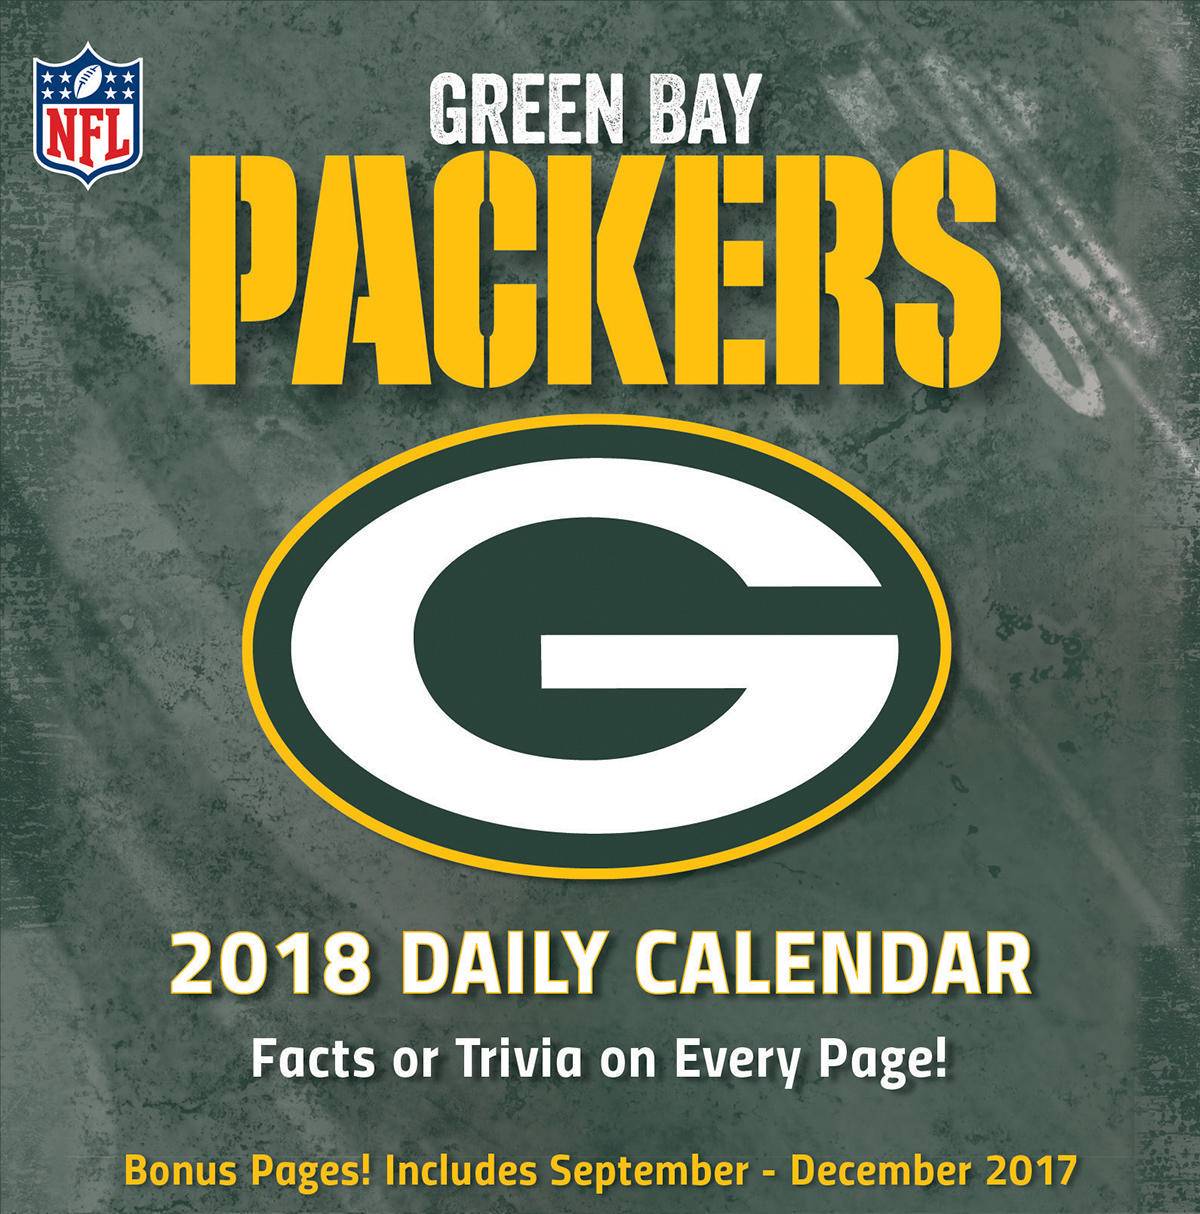 Turner 2018 NFL Green Bay Packers Box Calendar Играландия интернет